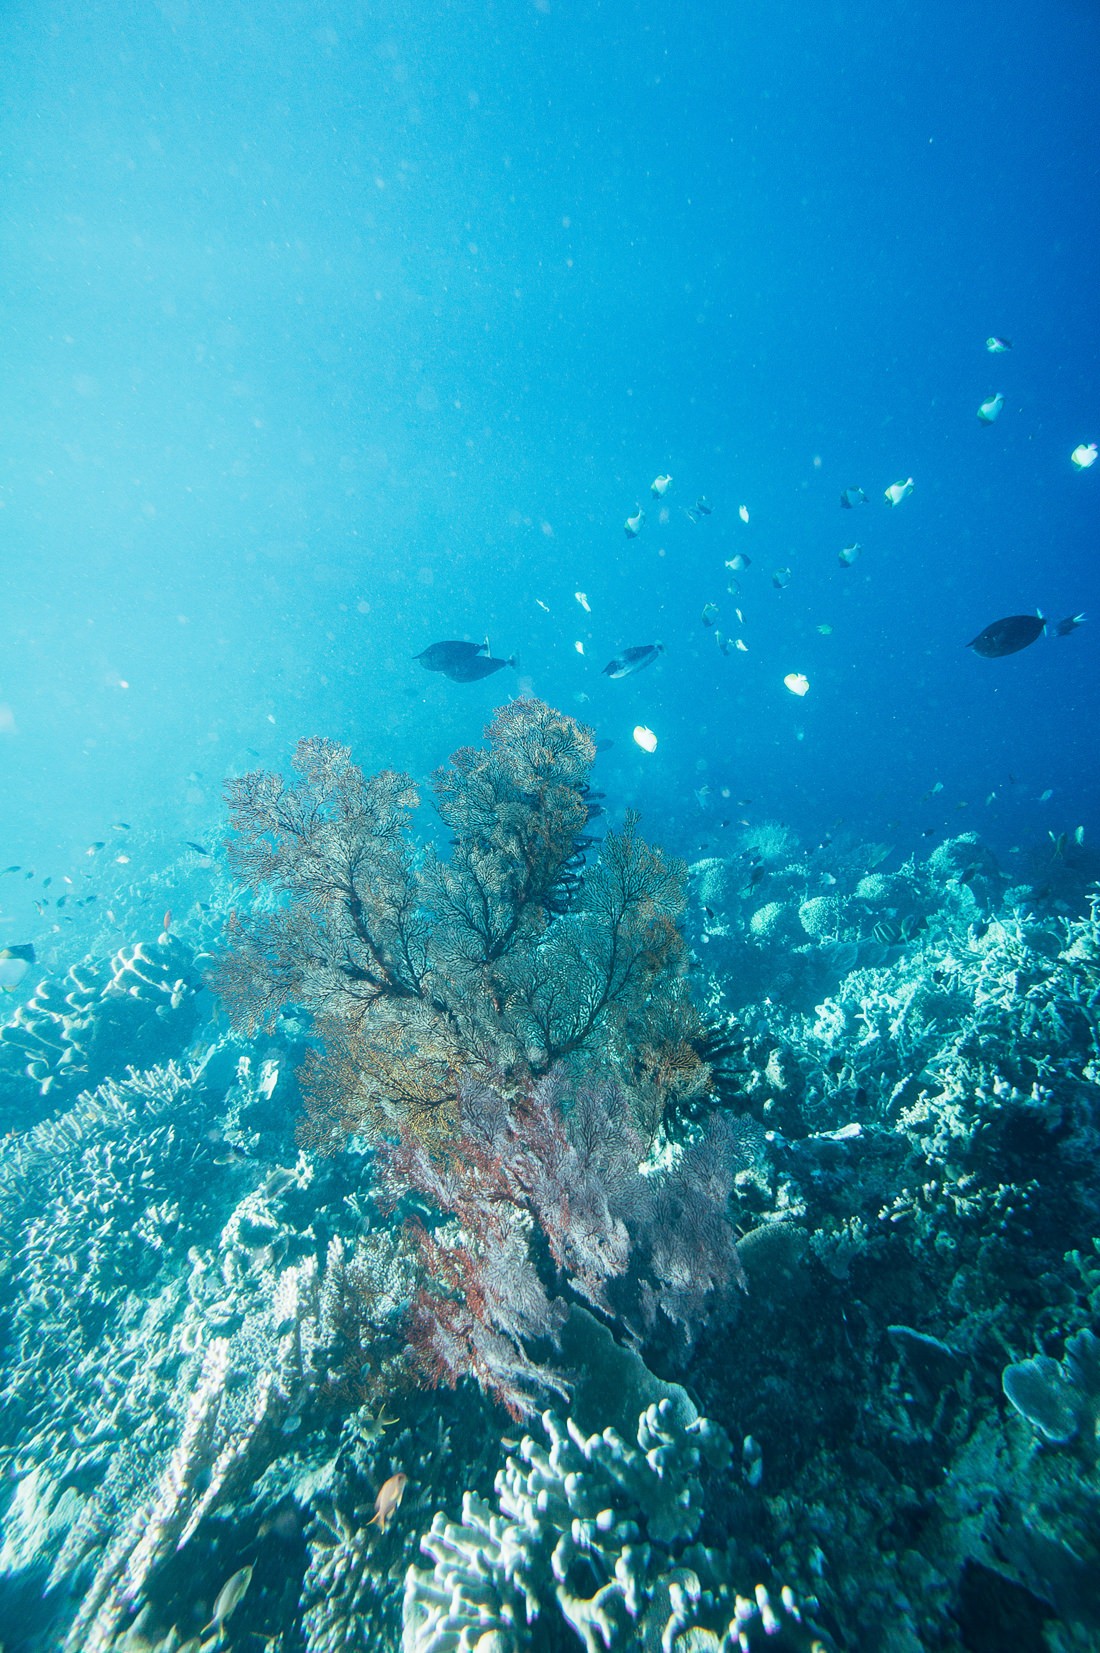 006 borneo derawan island sangalaki diving - Borneo - Schnorcheln mit Mantas in Derawan/Sangalaki